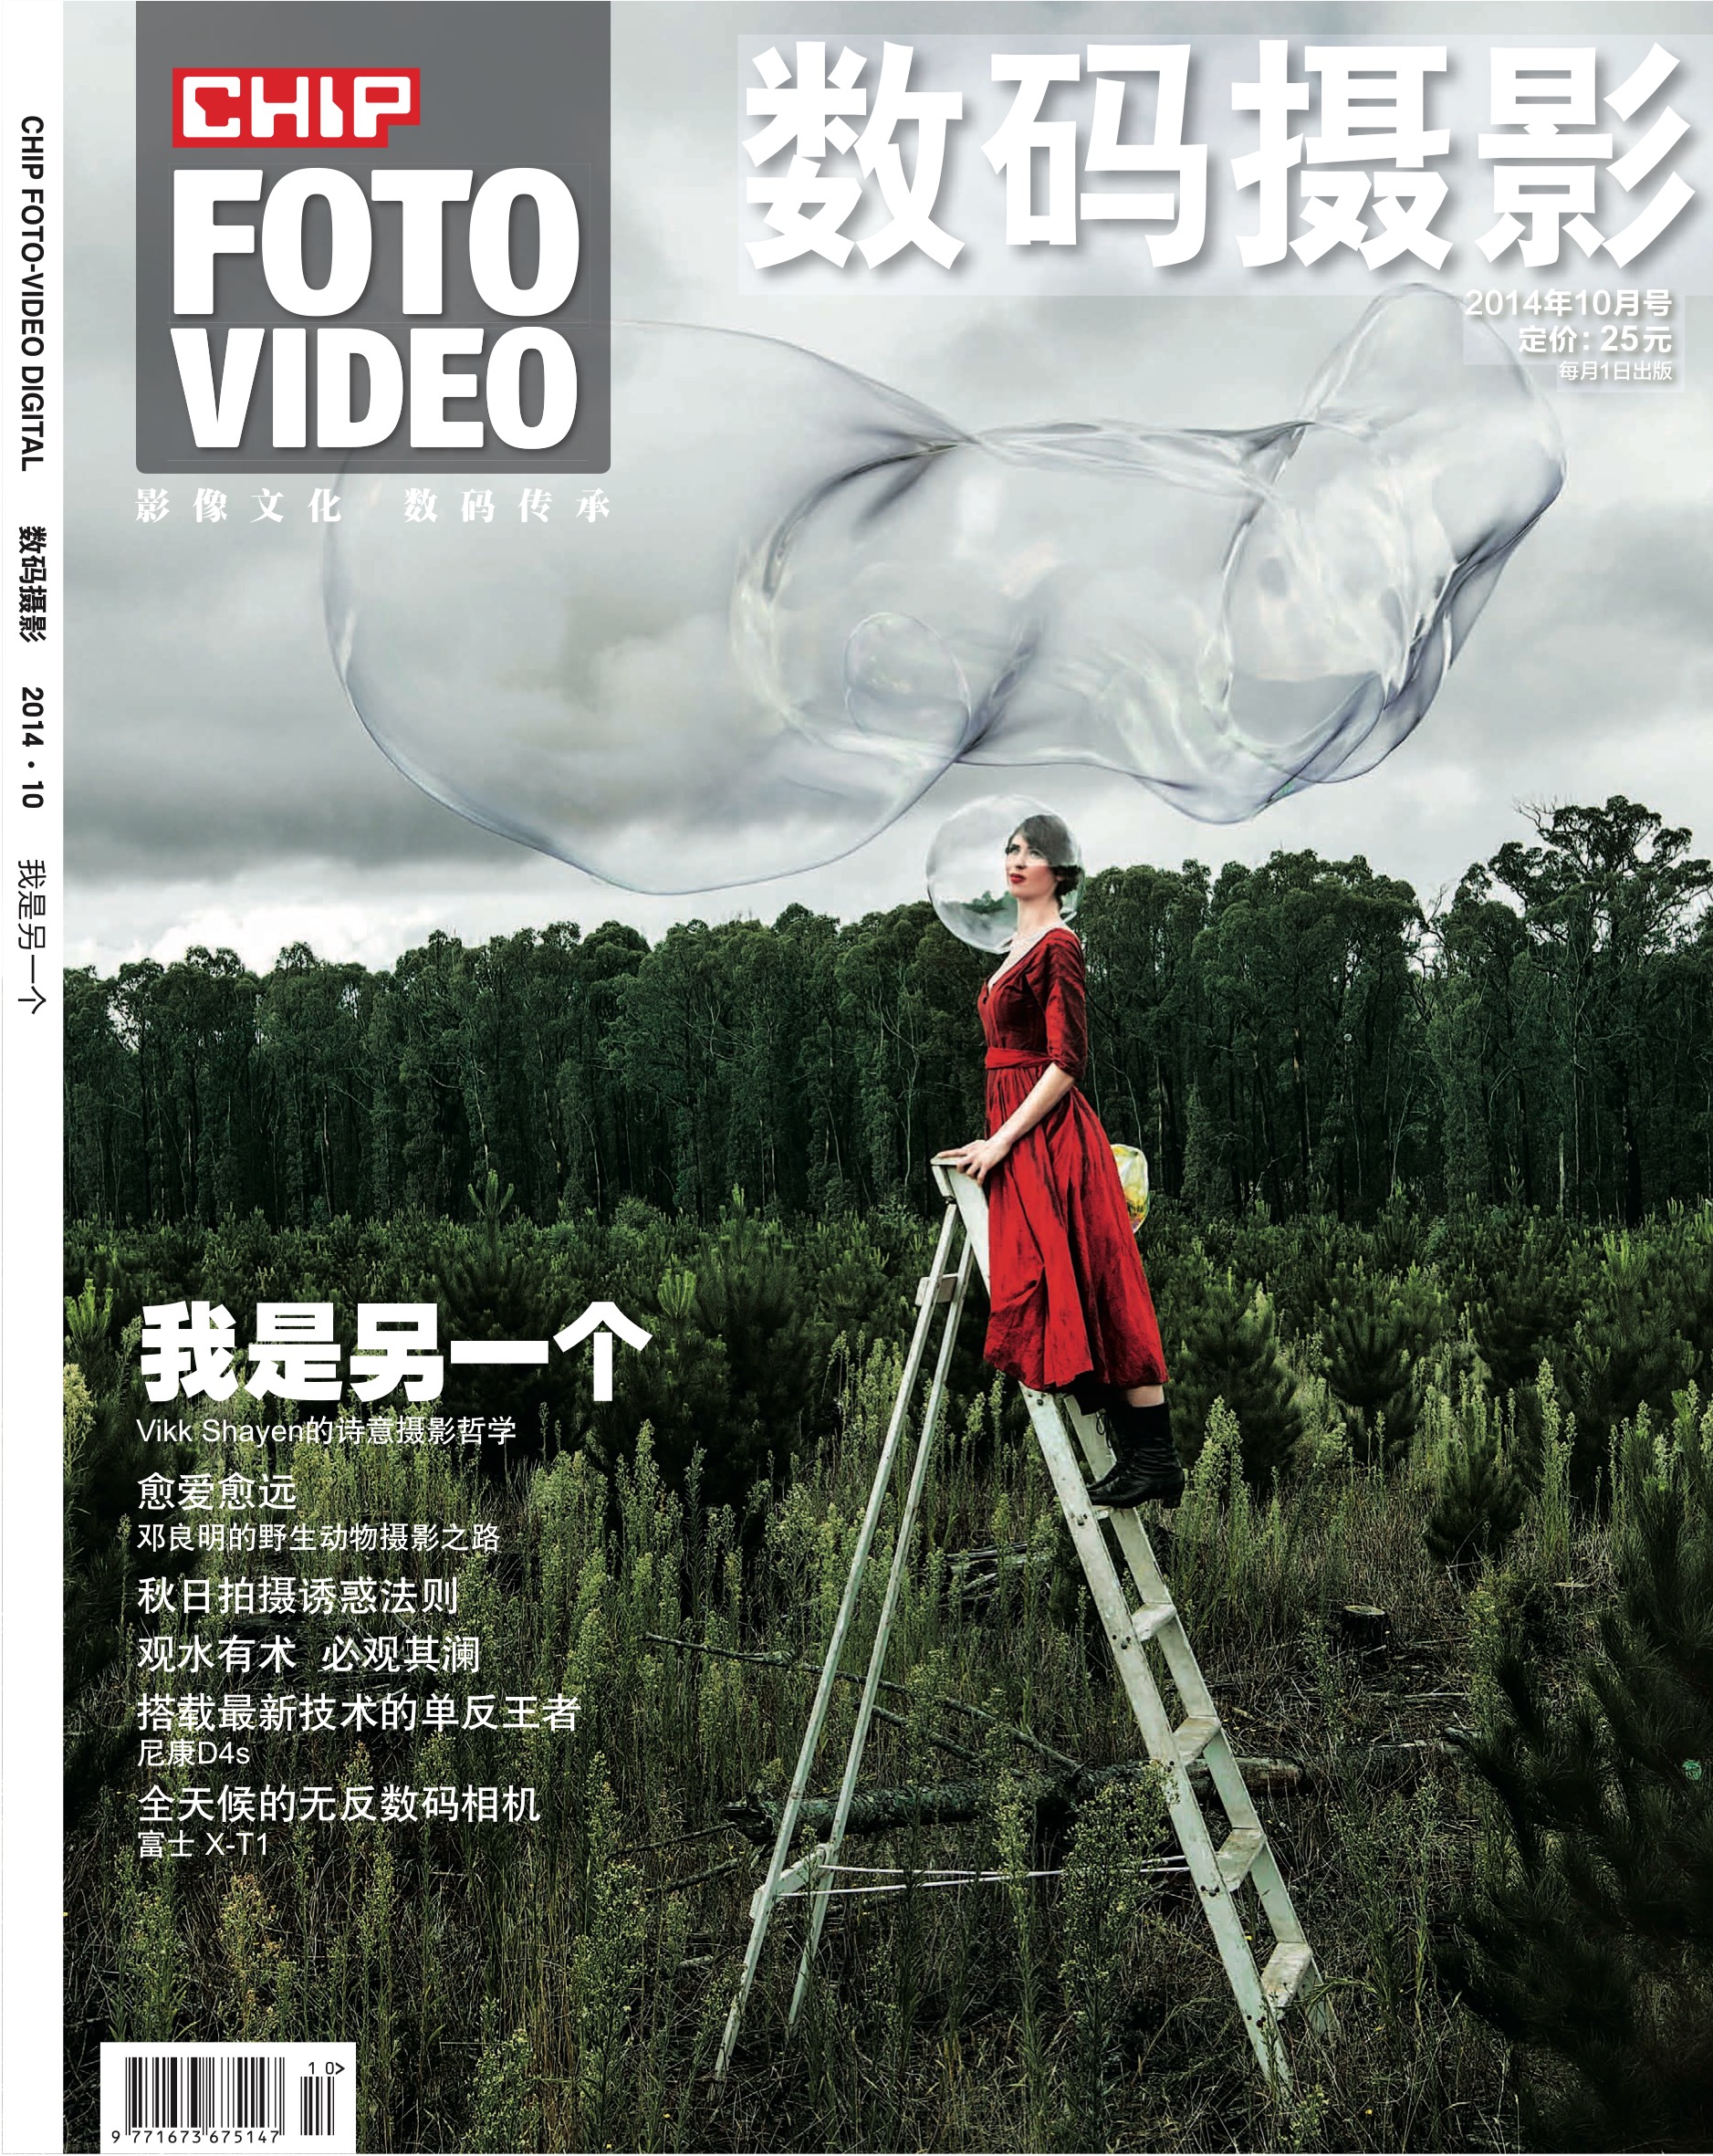 Chipfoto Magazine interview October 2014_Cover.jpeg